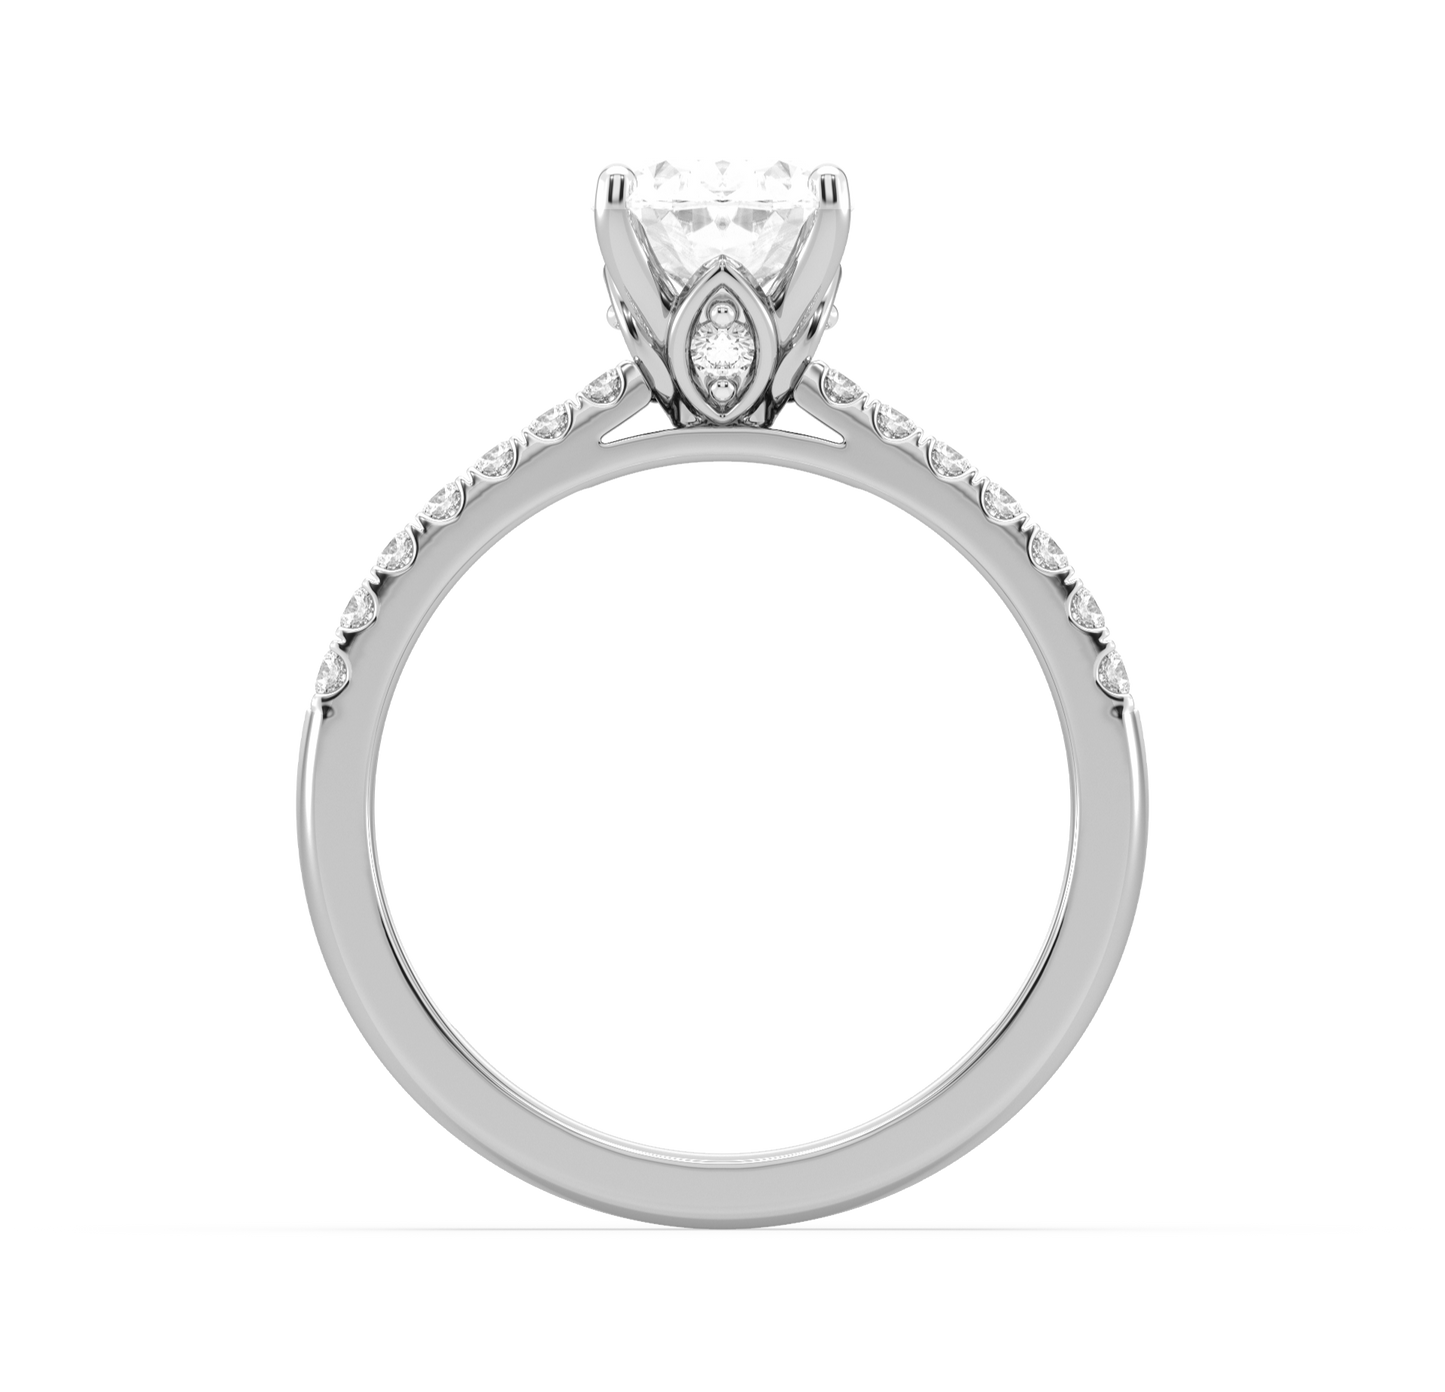 Customised ring RG21012-PH21030